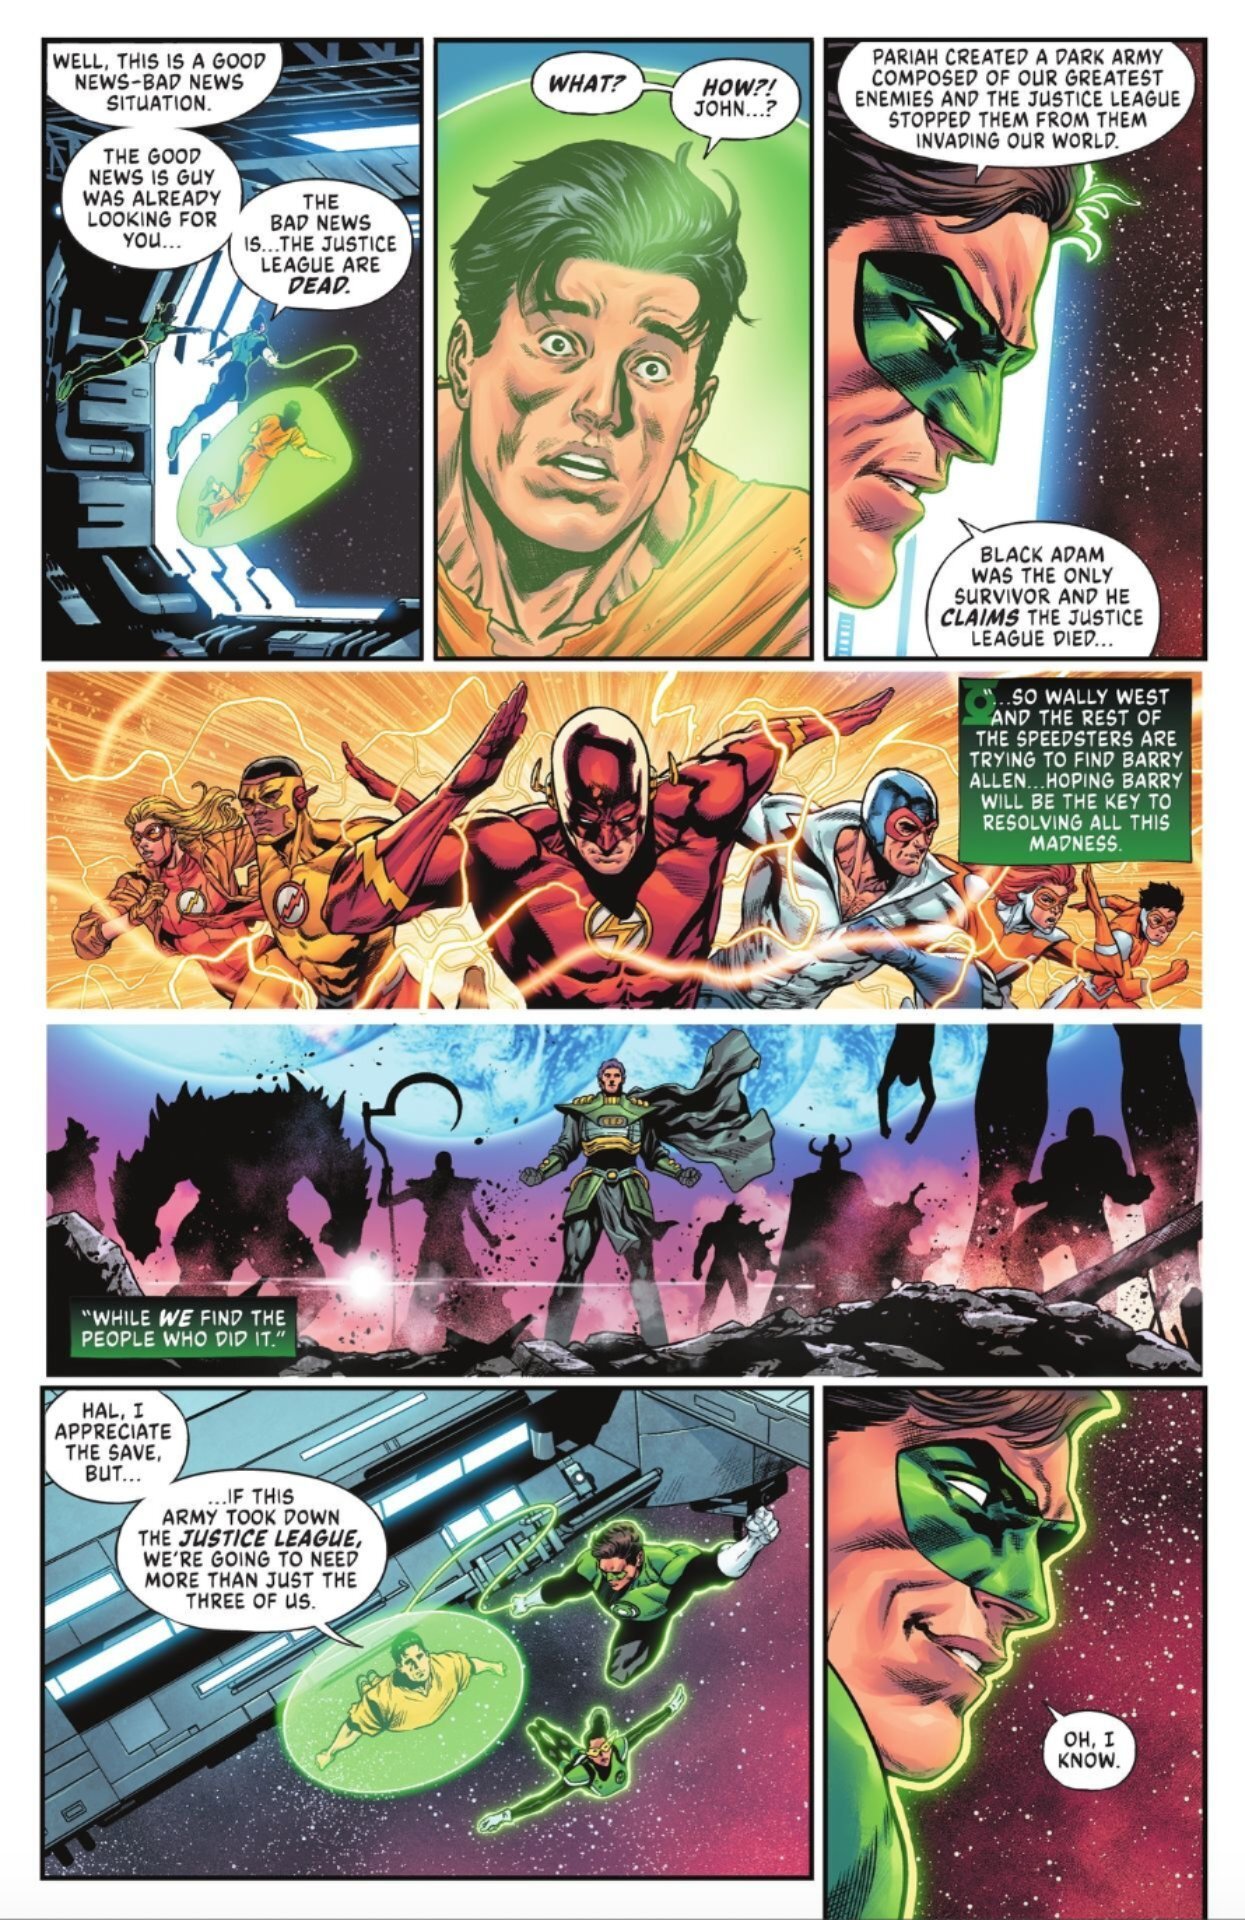 Hal and Jo retrieve Kyle Rayner in Dark Crisis #2